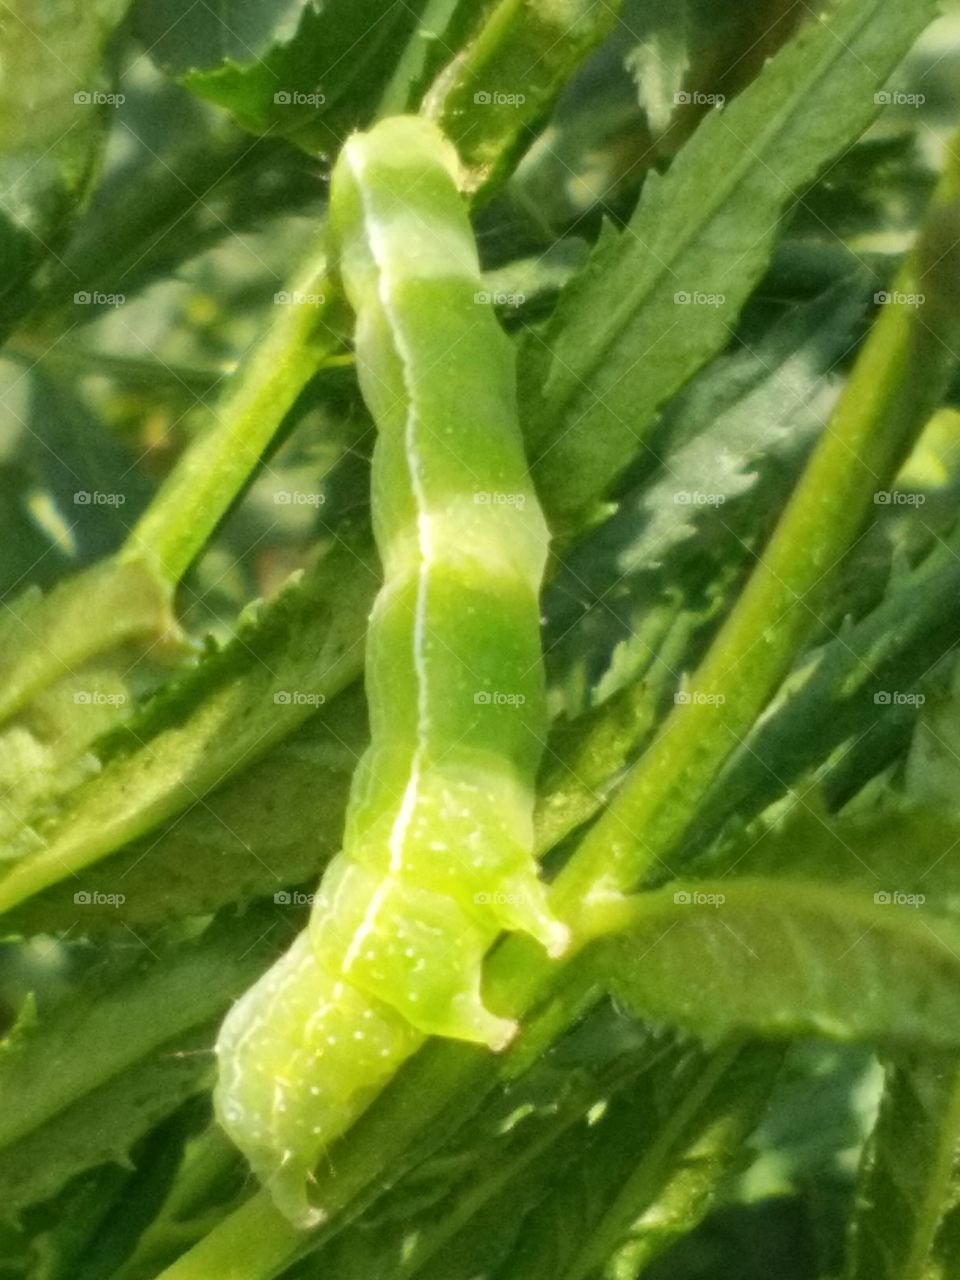 Little beautiful green worm